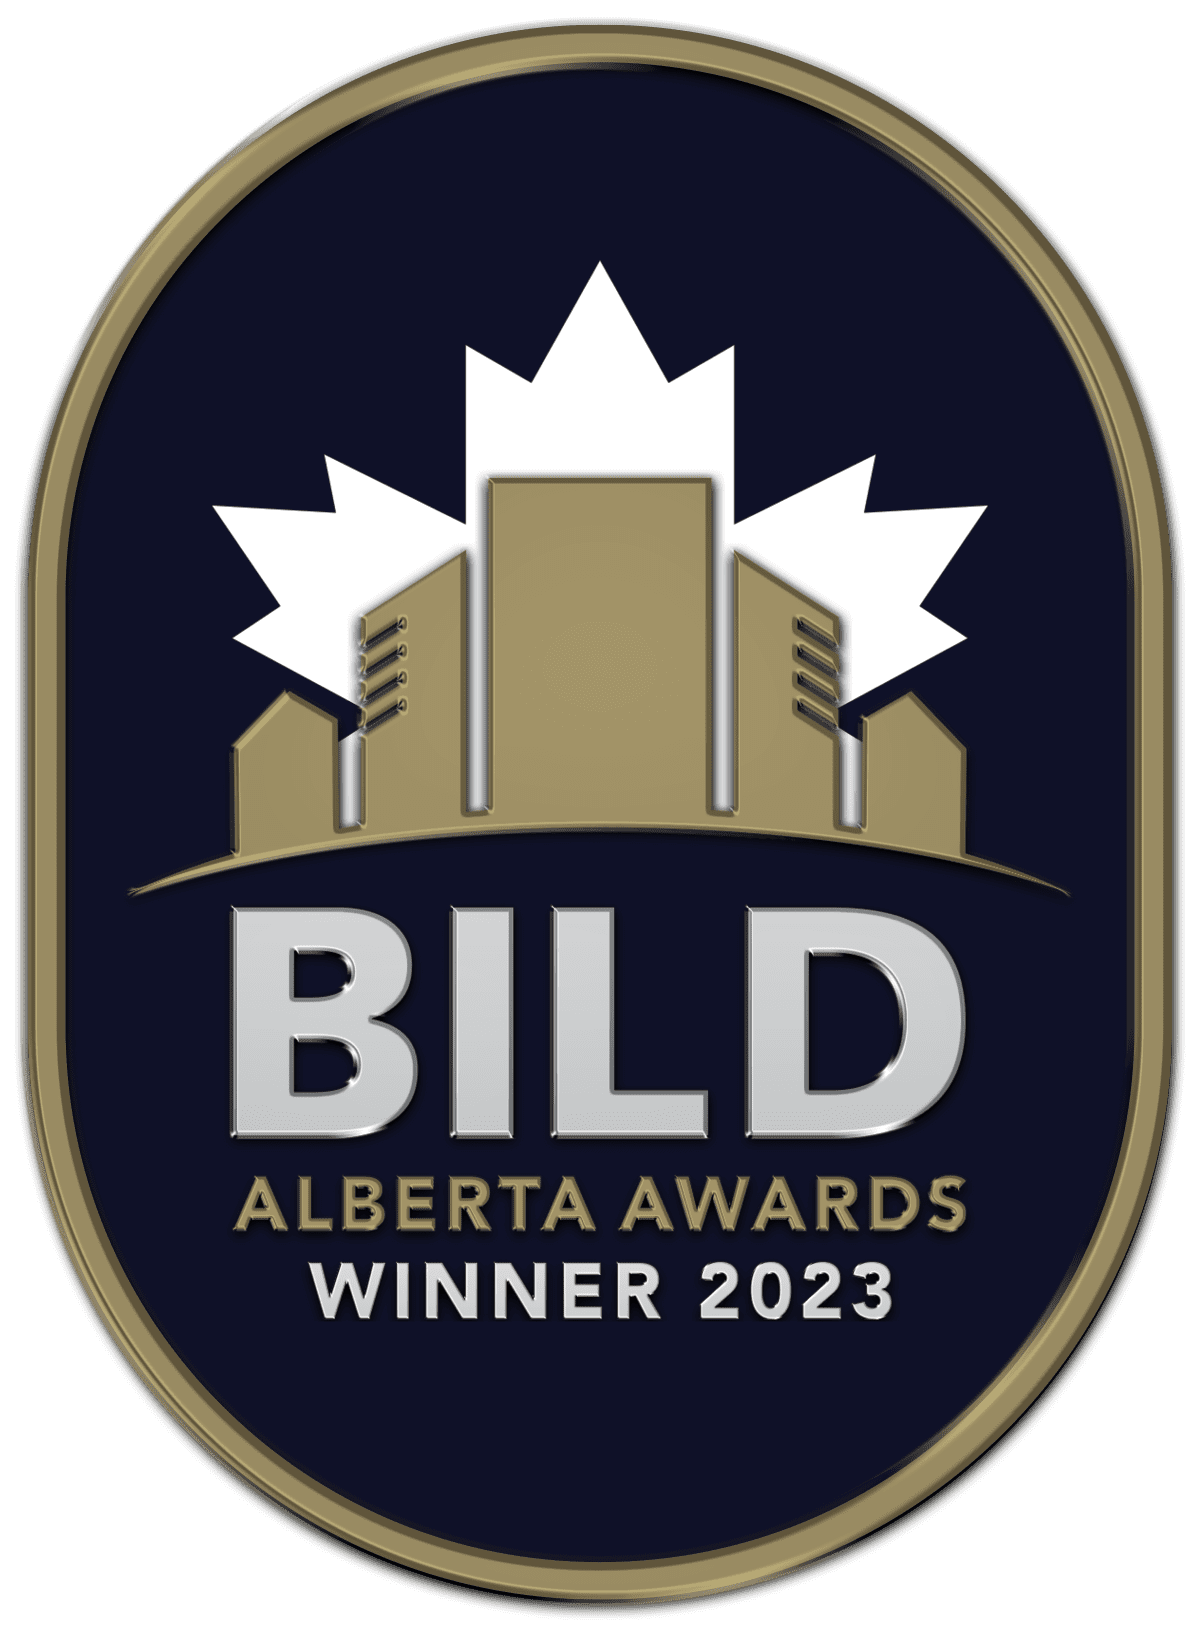 Wentworth - Alberta Awards winner 2022.